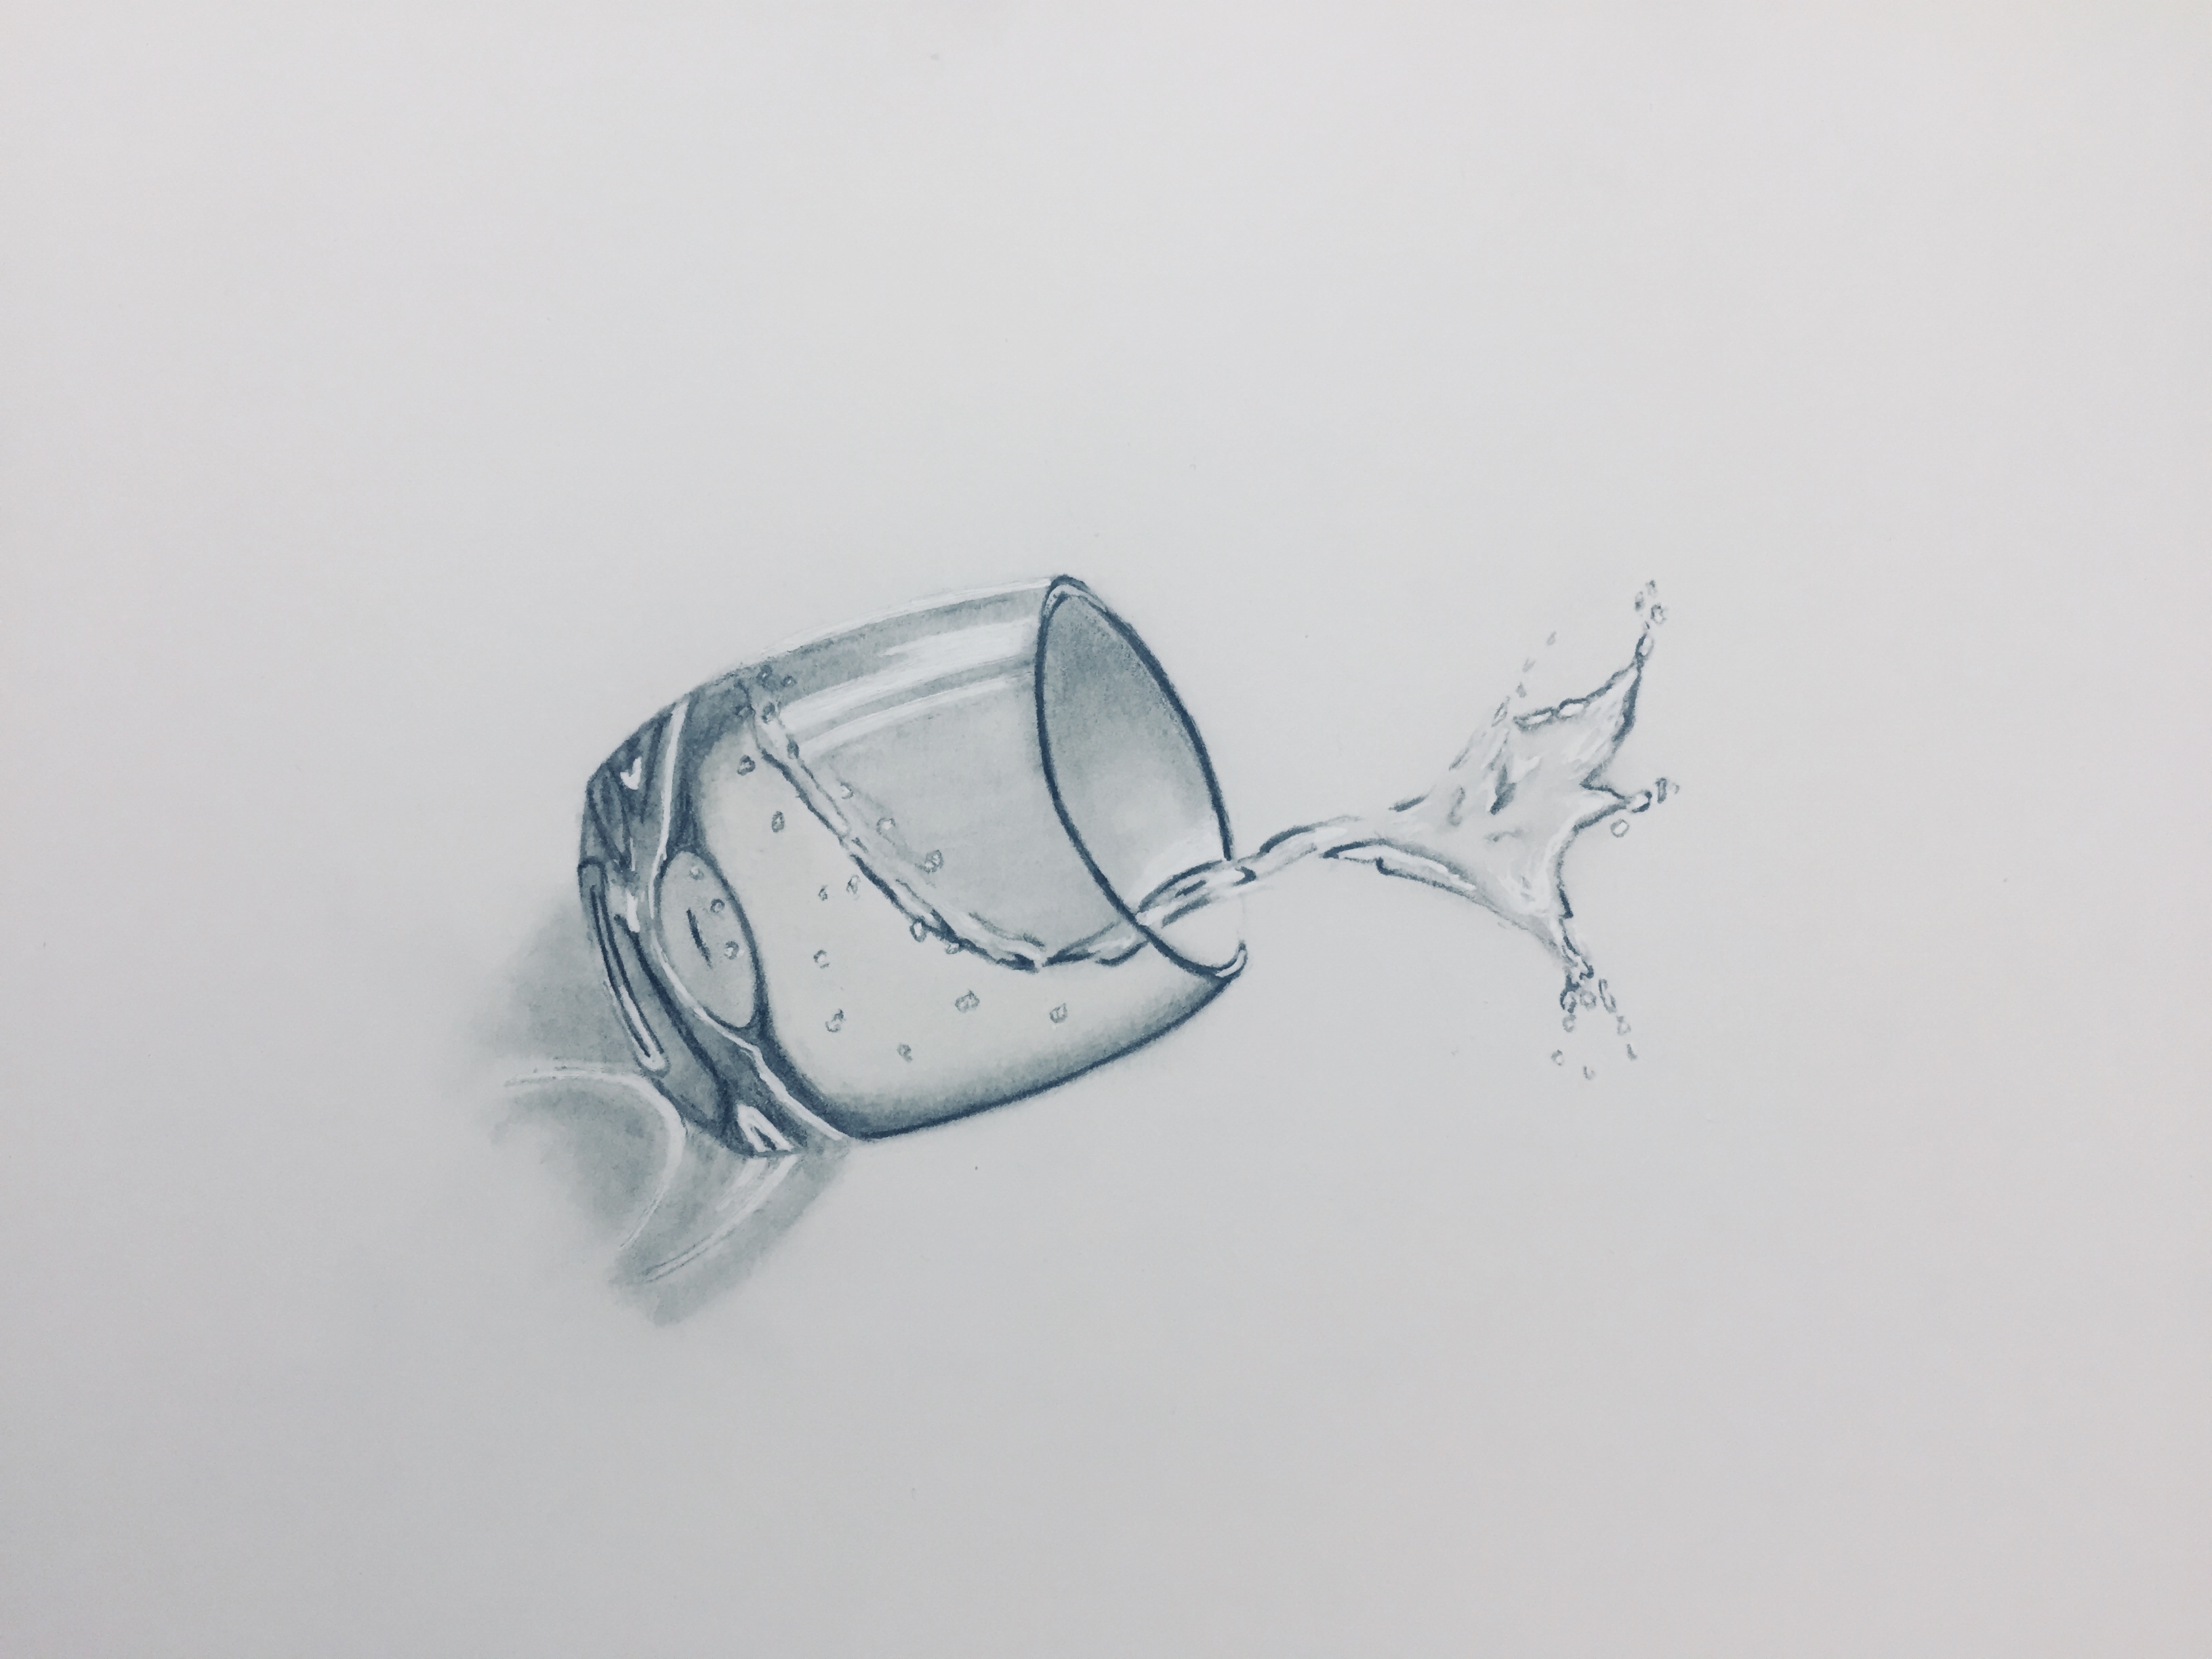 Spoon Glass Water Pencil Sketch Illustration Stock Illustration 1532906492   Shutterstock